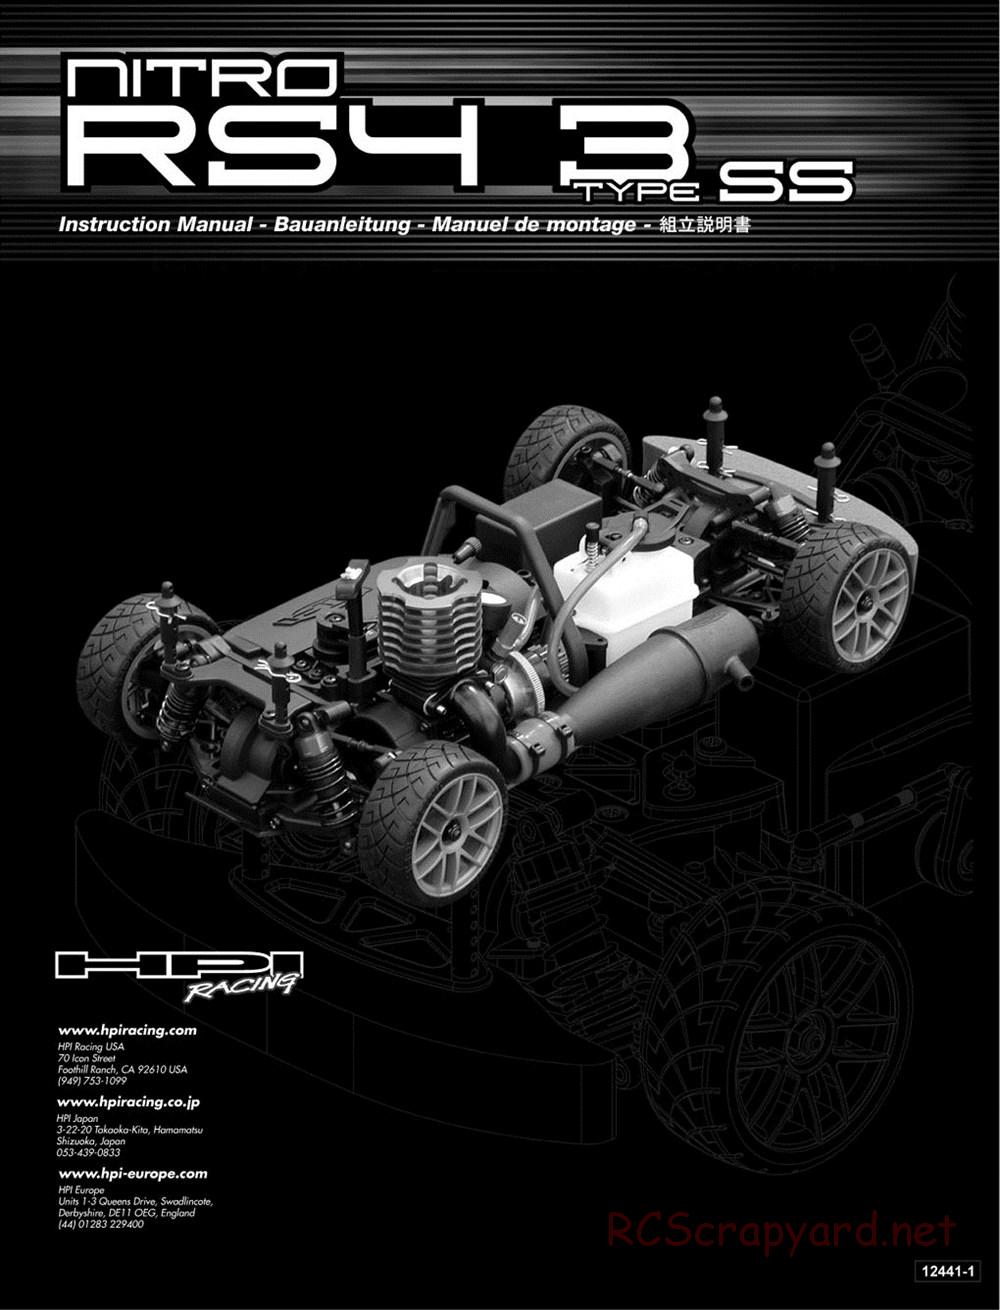 HPI - Nitro RS4 3 SS (2002) - Manual - Page 1